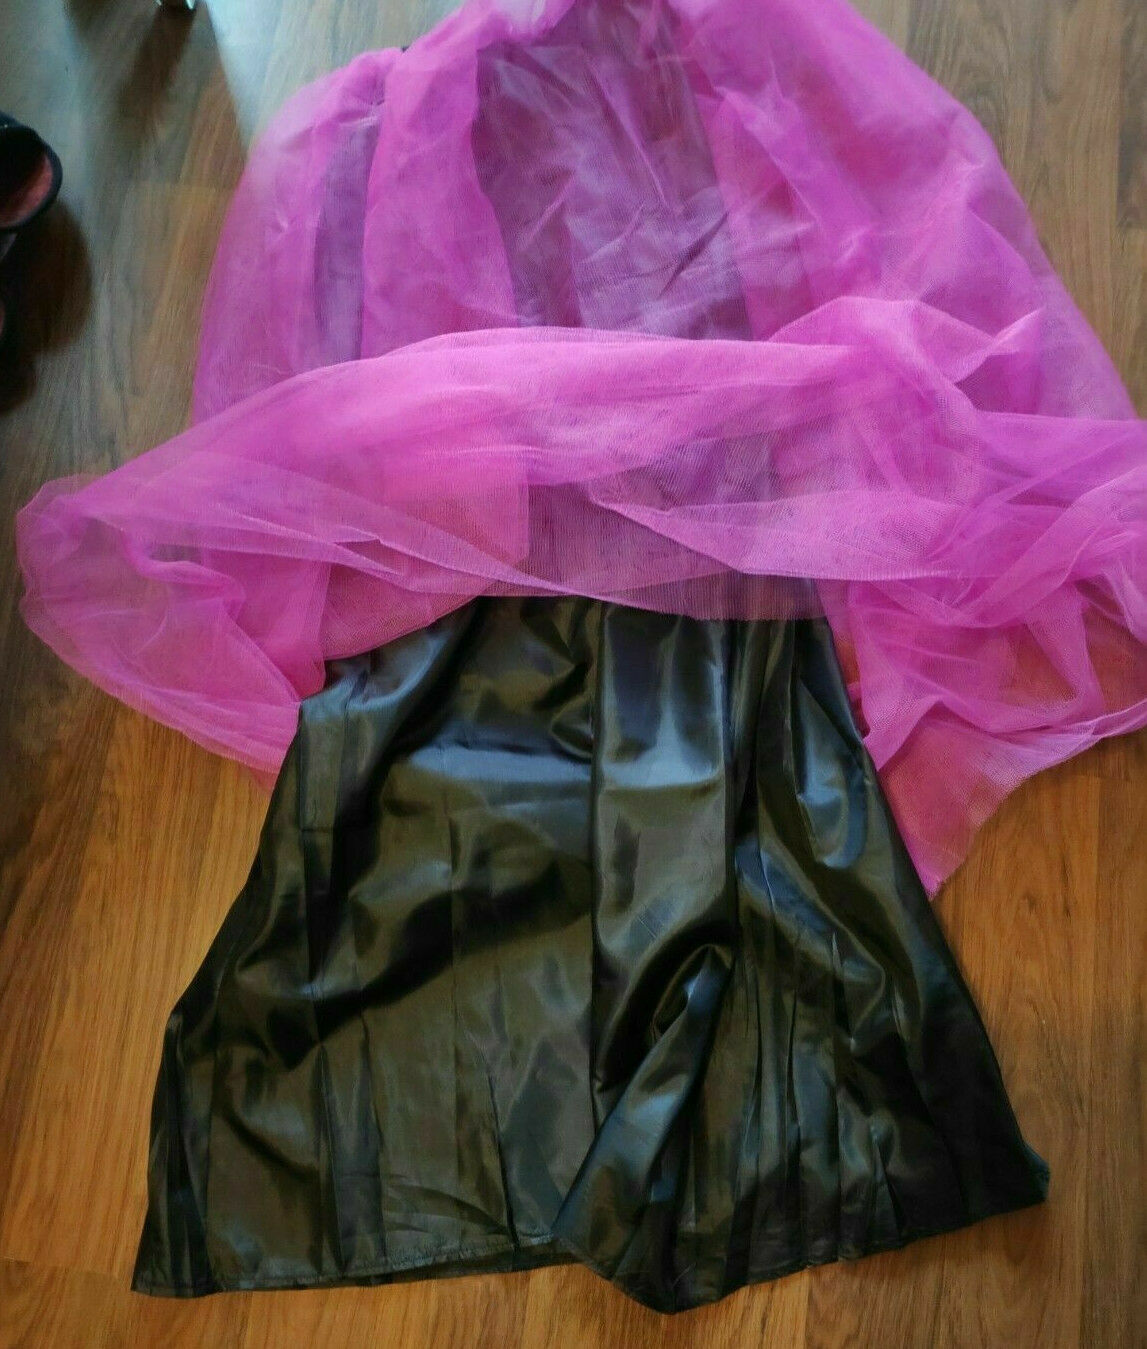 Phaze Clothing 2 Layer's Skirt Pink With Black Under Skirt Size Medium Long... PINK